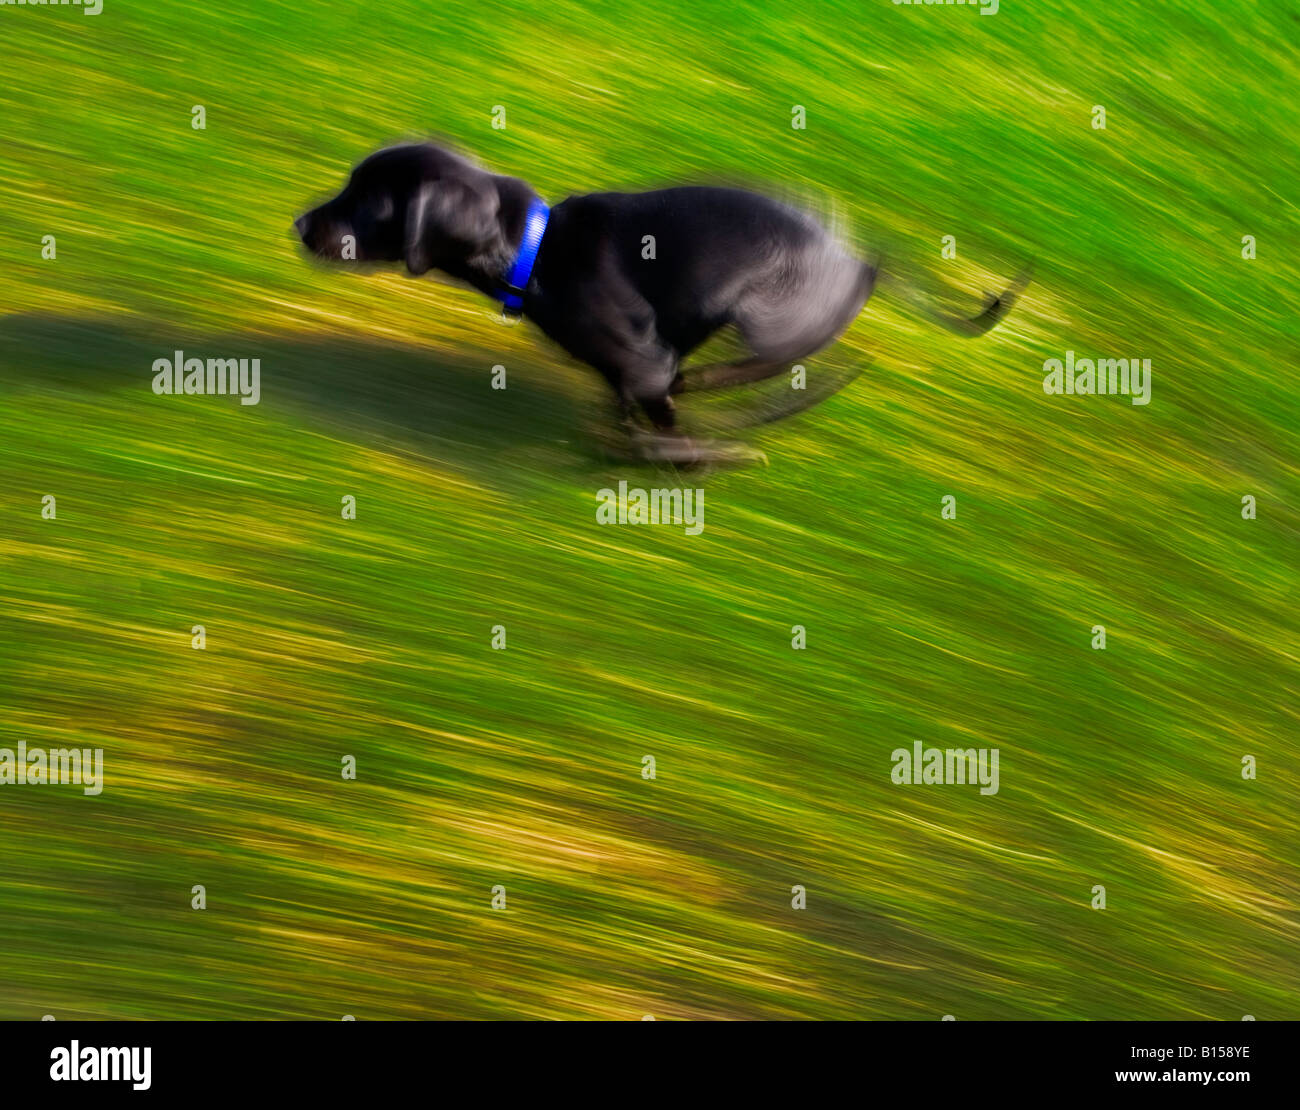 A black dog running Stock Photo